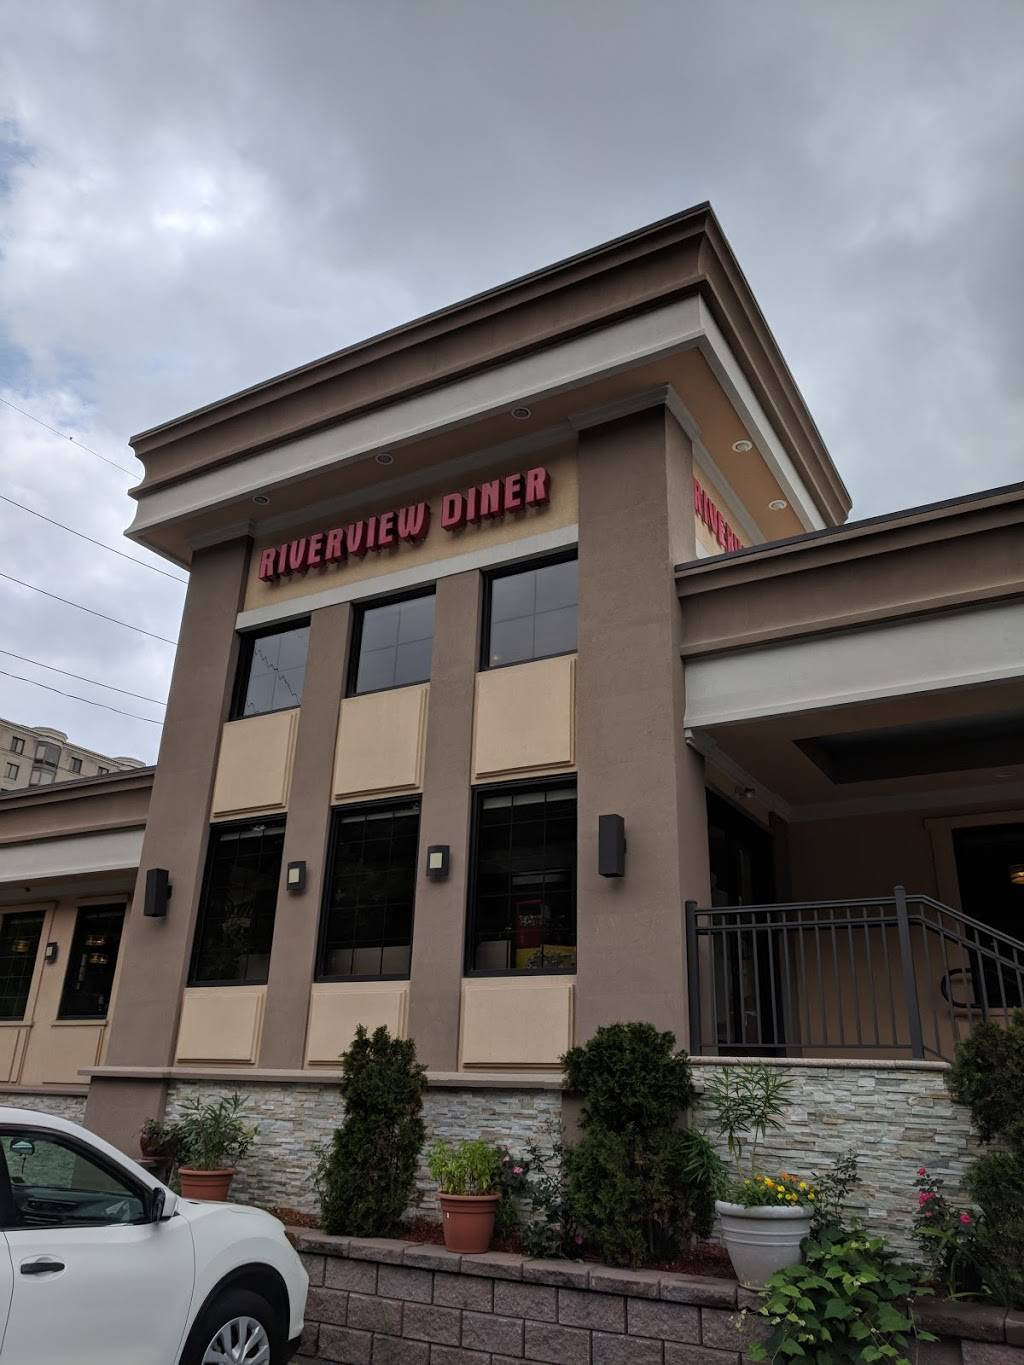 River View Diner | restaurant | 7850 River Rd, North Bergen, NJ 07047, USA | 2018685400 OR +1 201-868-5400